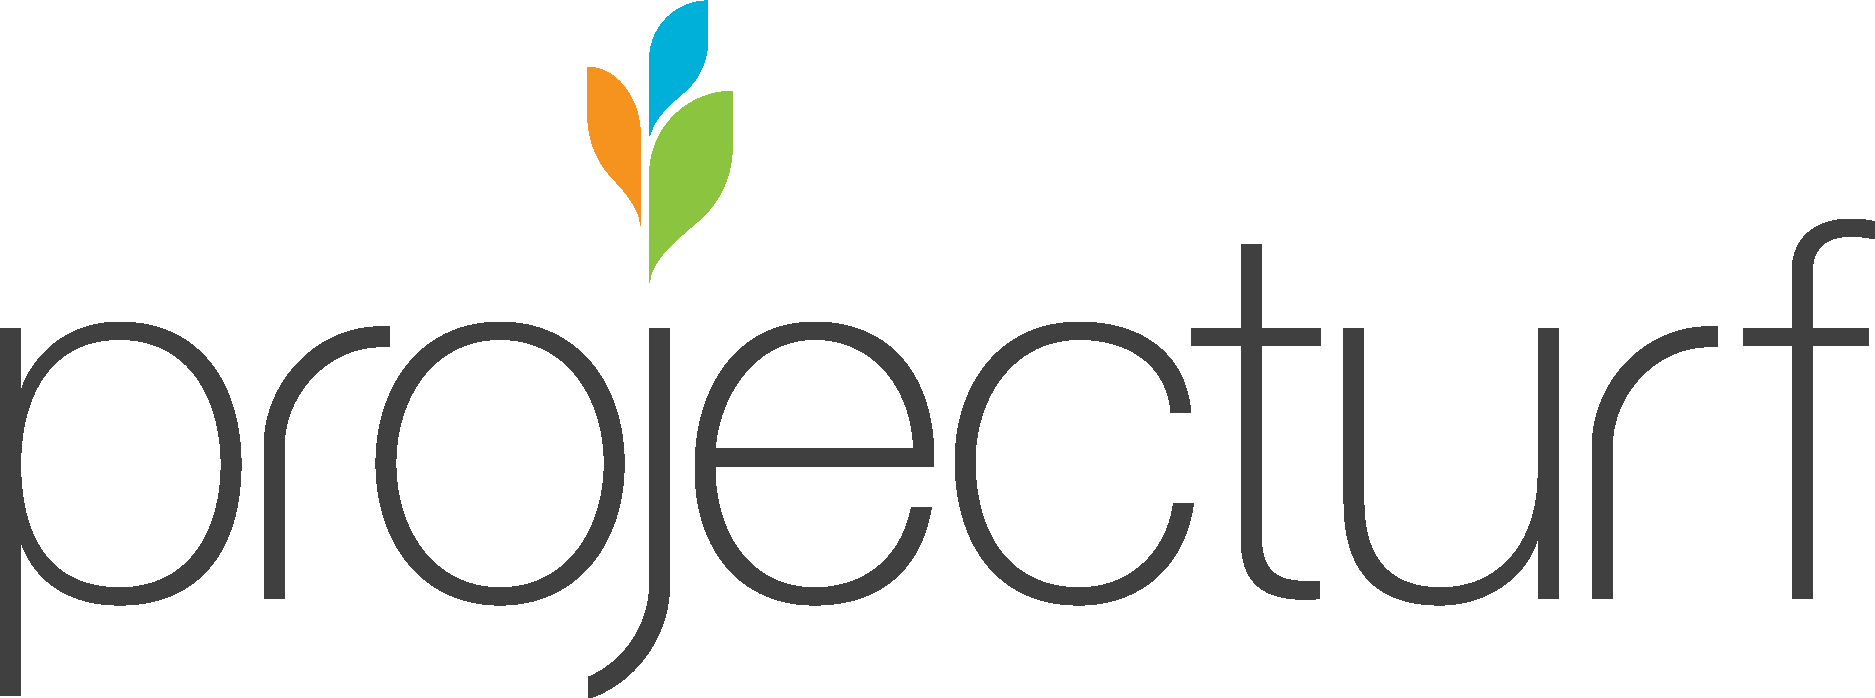 Projecturf Logo Vector